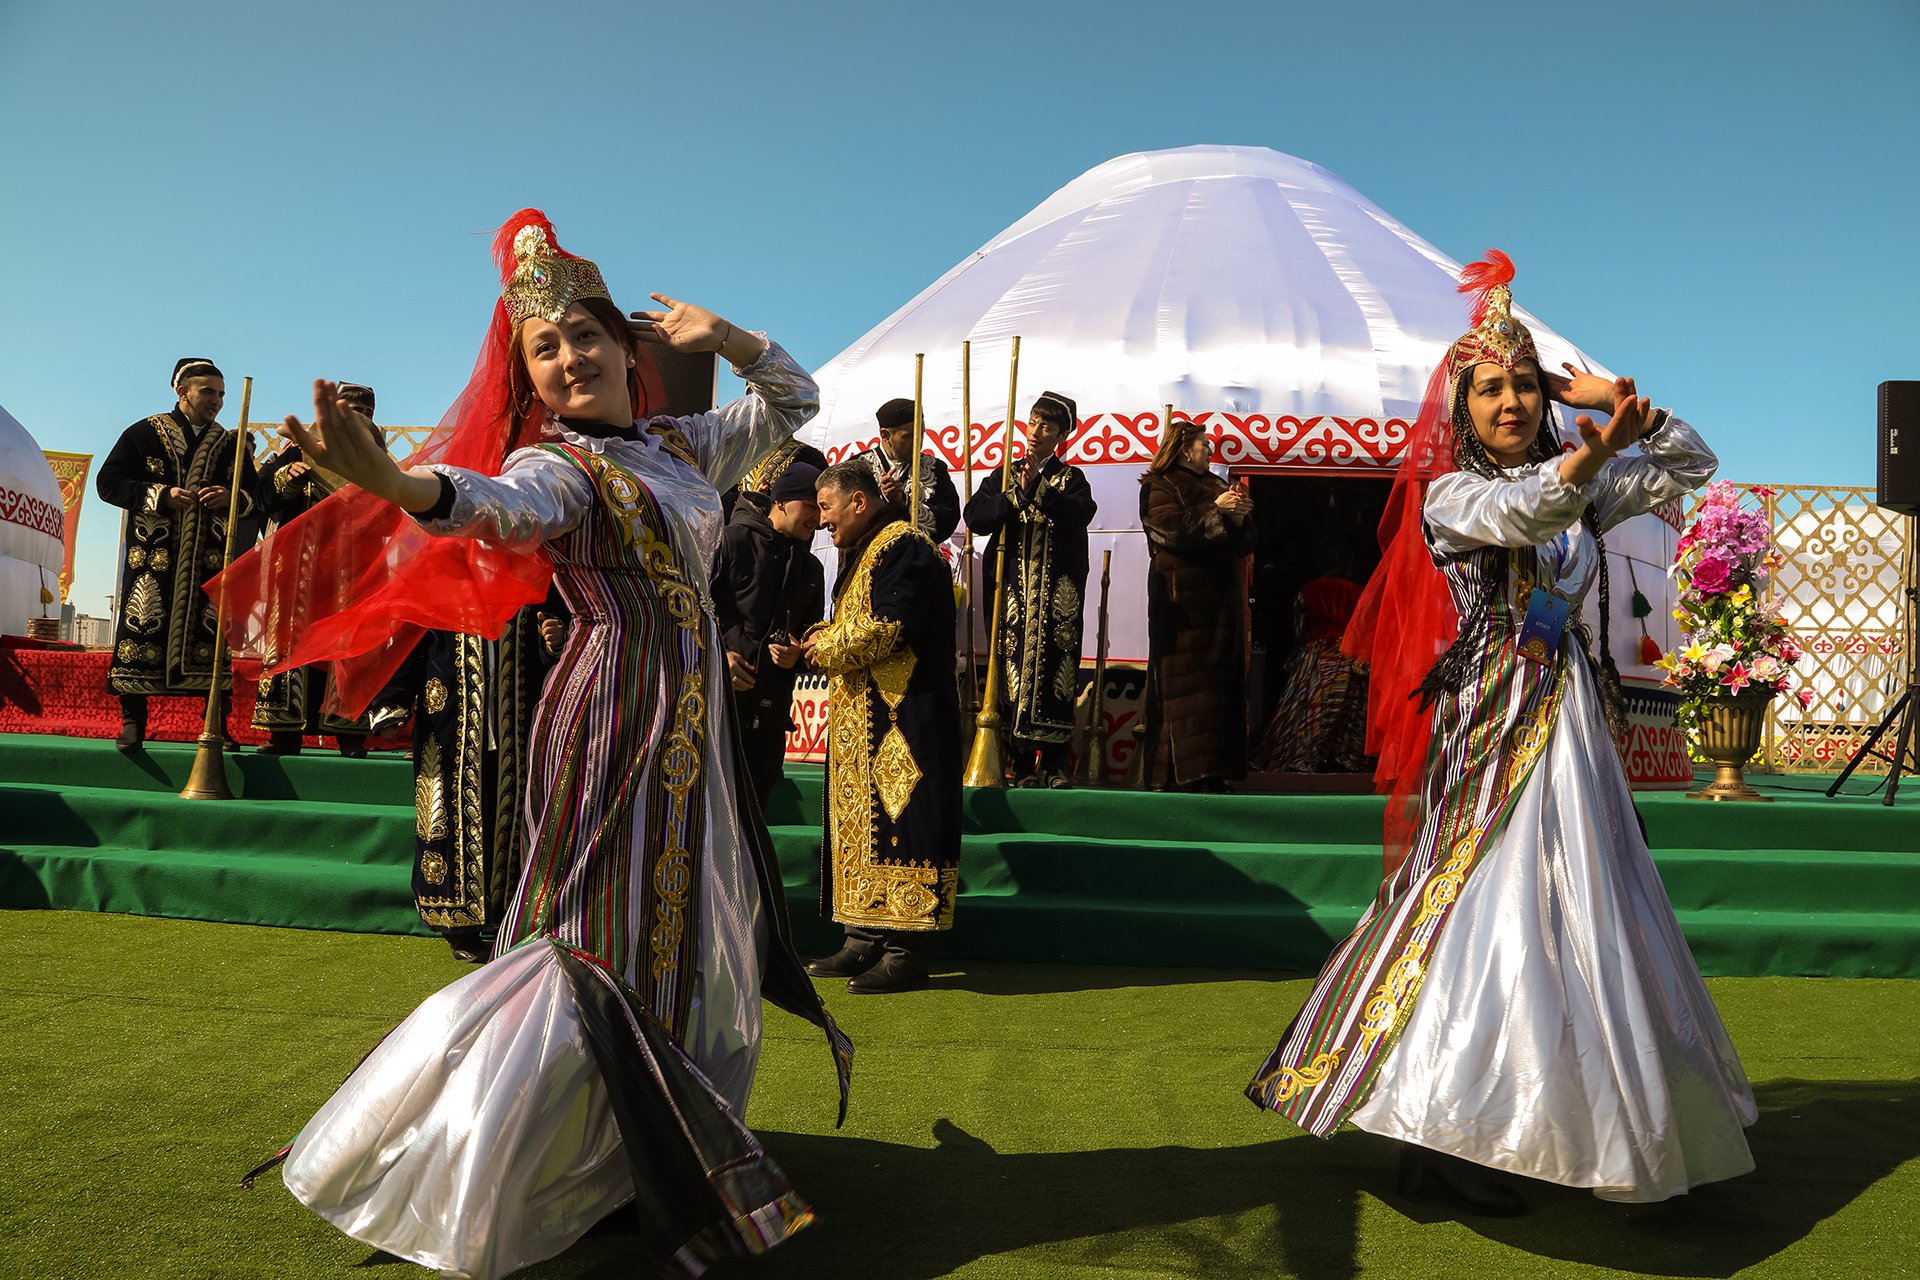 Kazakh traditions